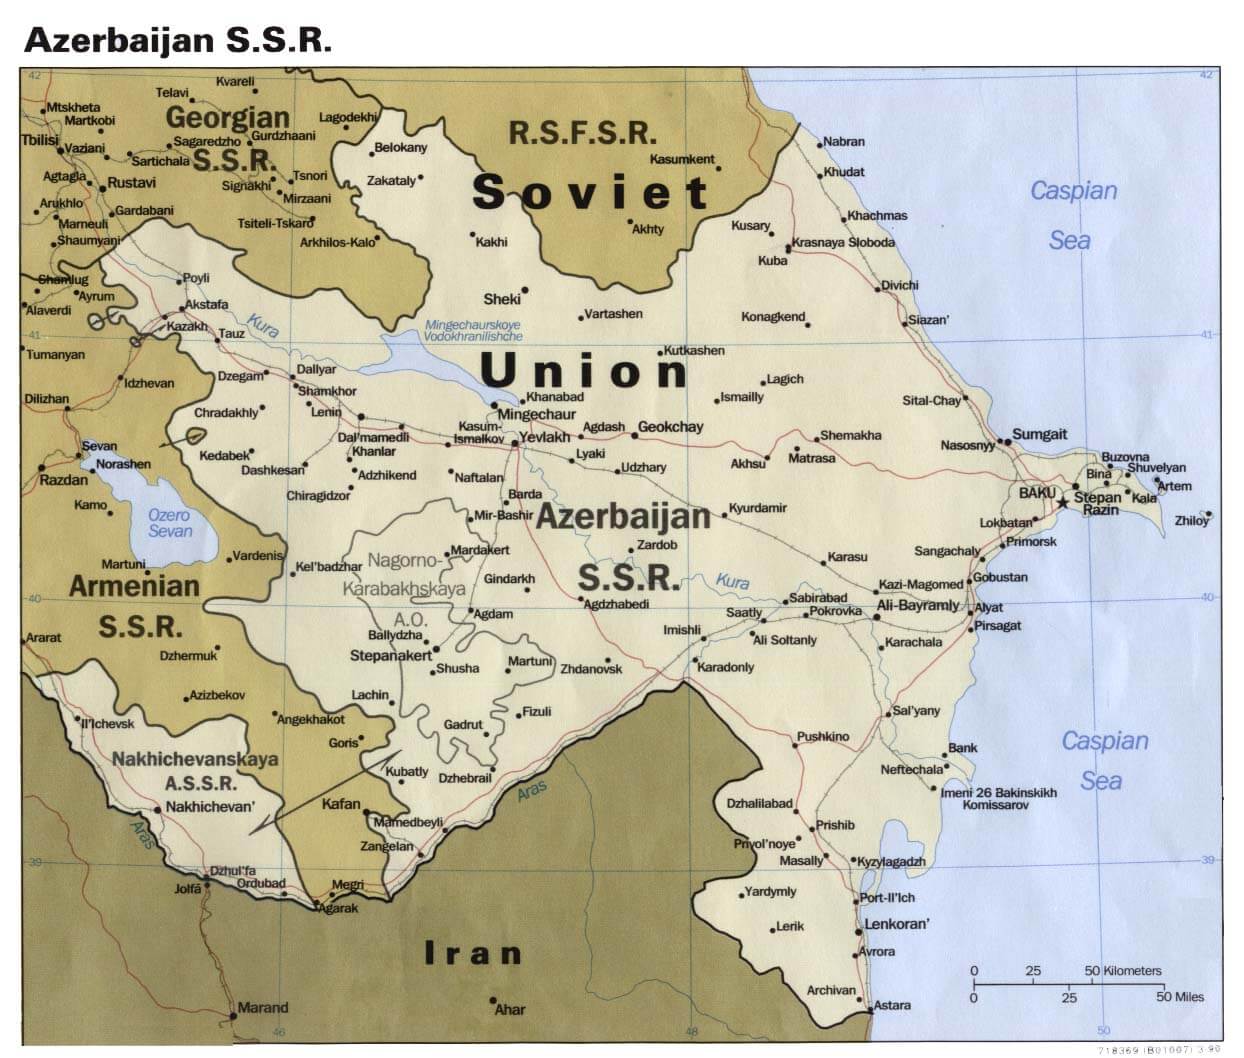 azerbaijan map ssr 1990